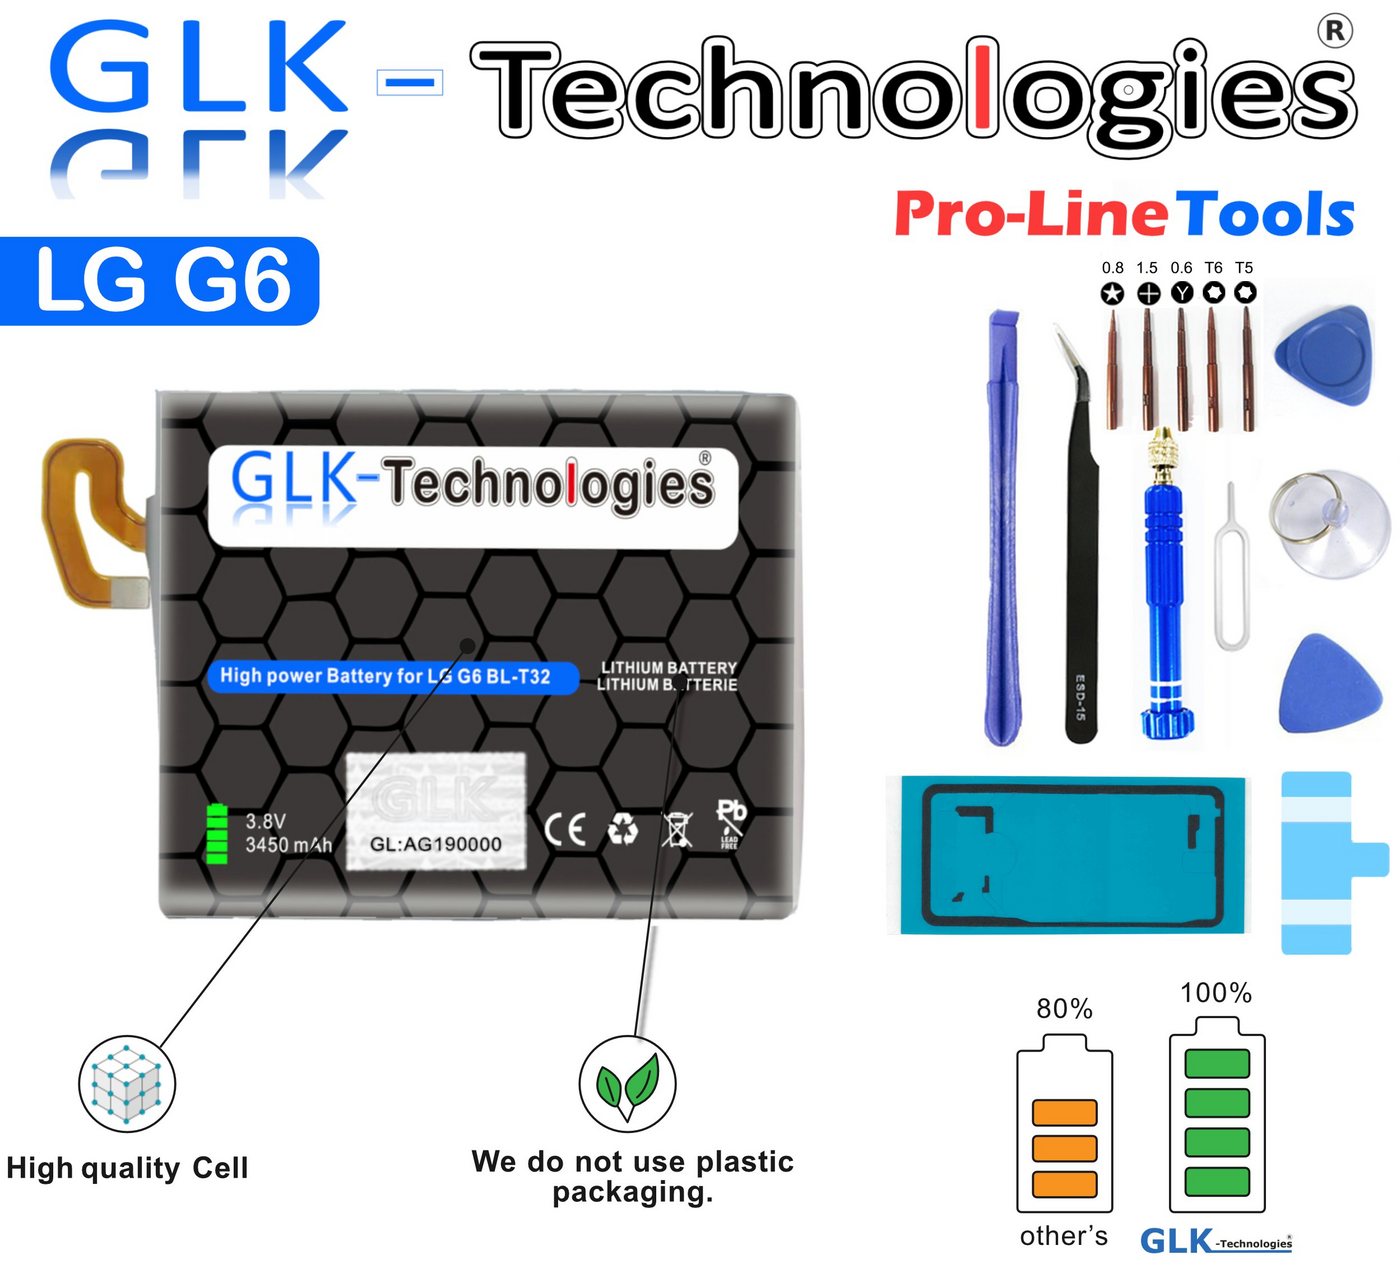 GLK-Technologies High Power Ersatzakku kompatibel mit LG G6 G6+ H870 H871 H872 LS993 VS998, GLK-Technologies Battery, accu, 3450 mAh Akku, inkl. Profi Werkzeug Set Kit Smartphone-Akku 3450 mAh (3.8 V) von GLK-Technologies